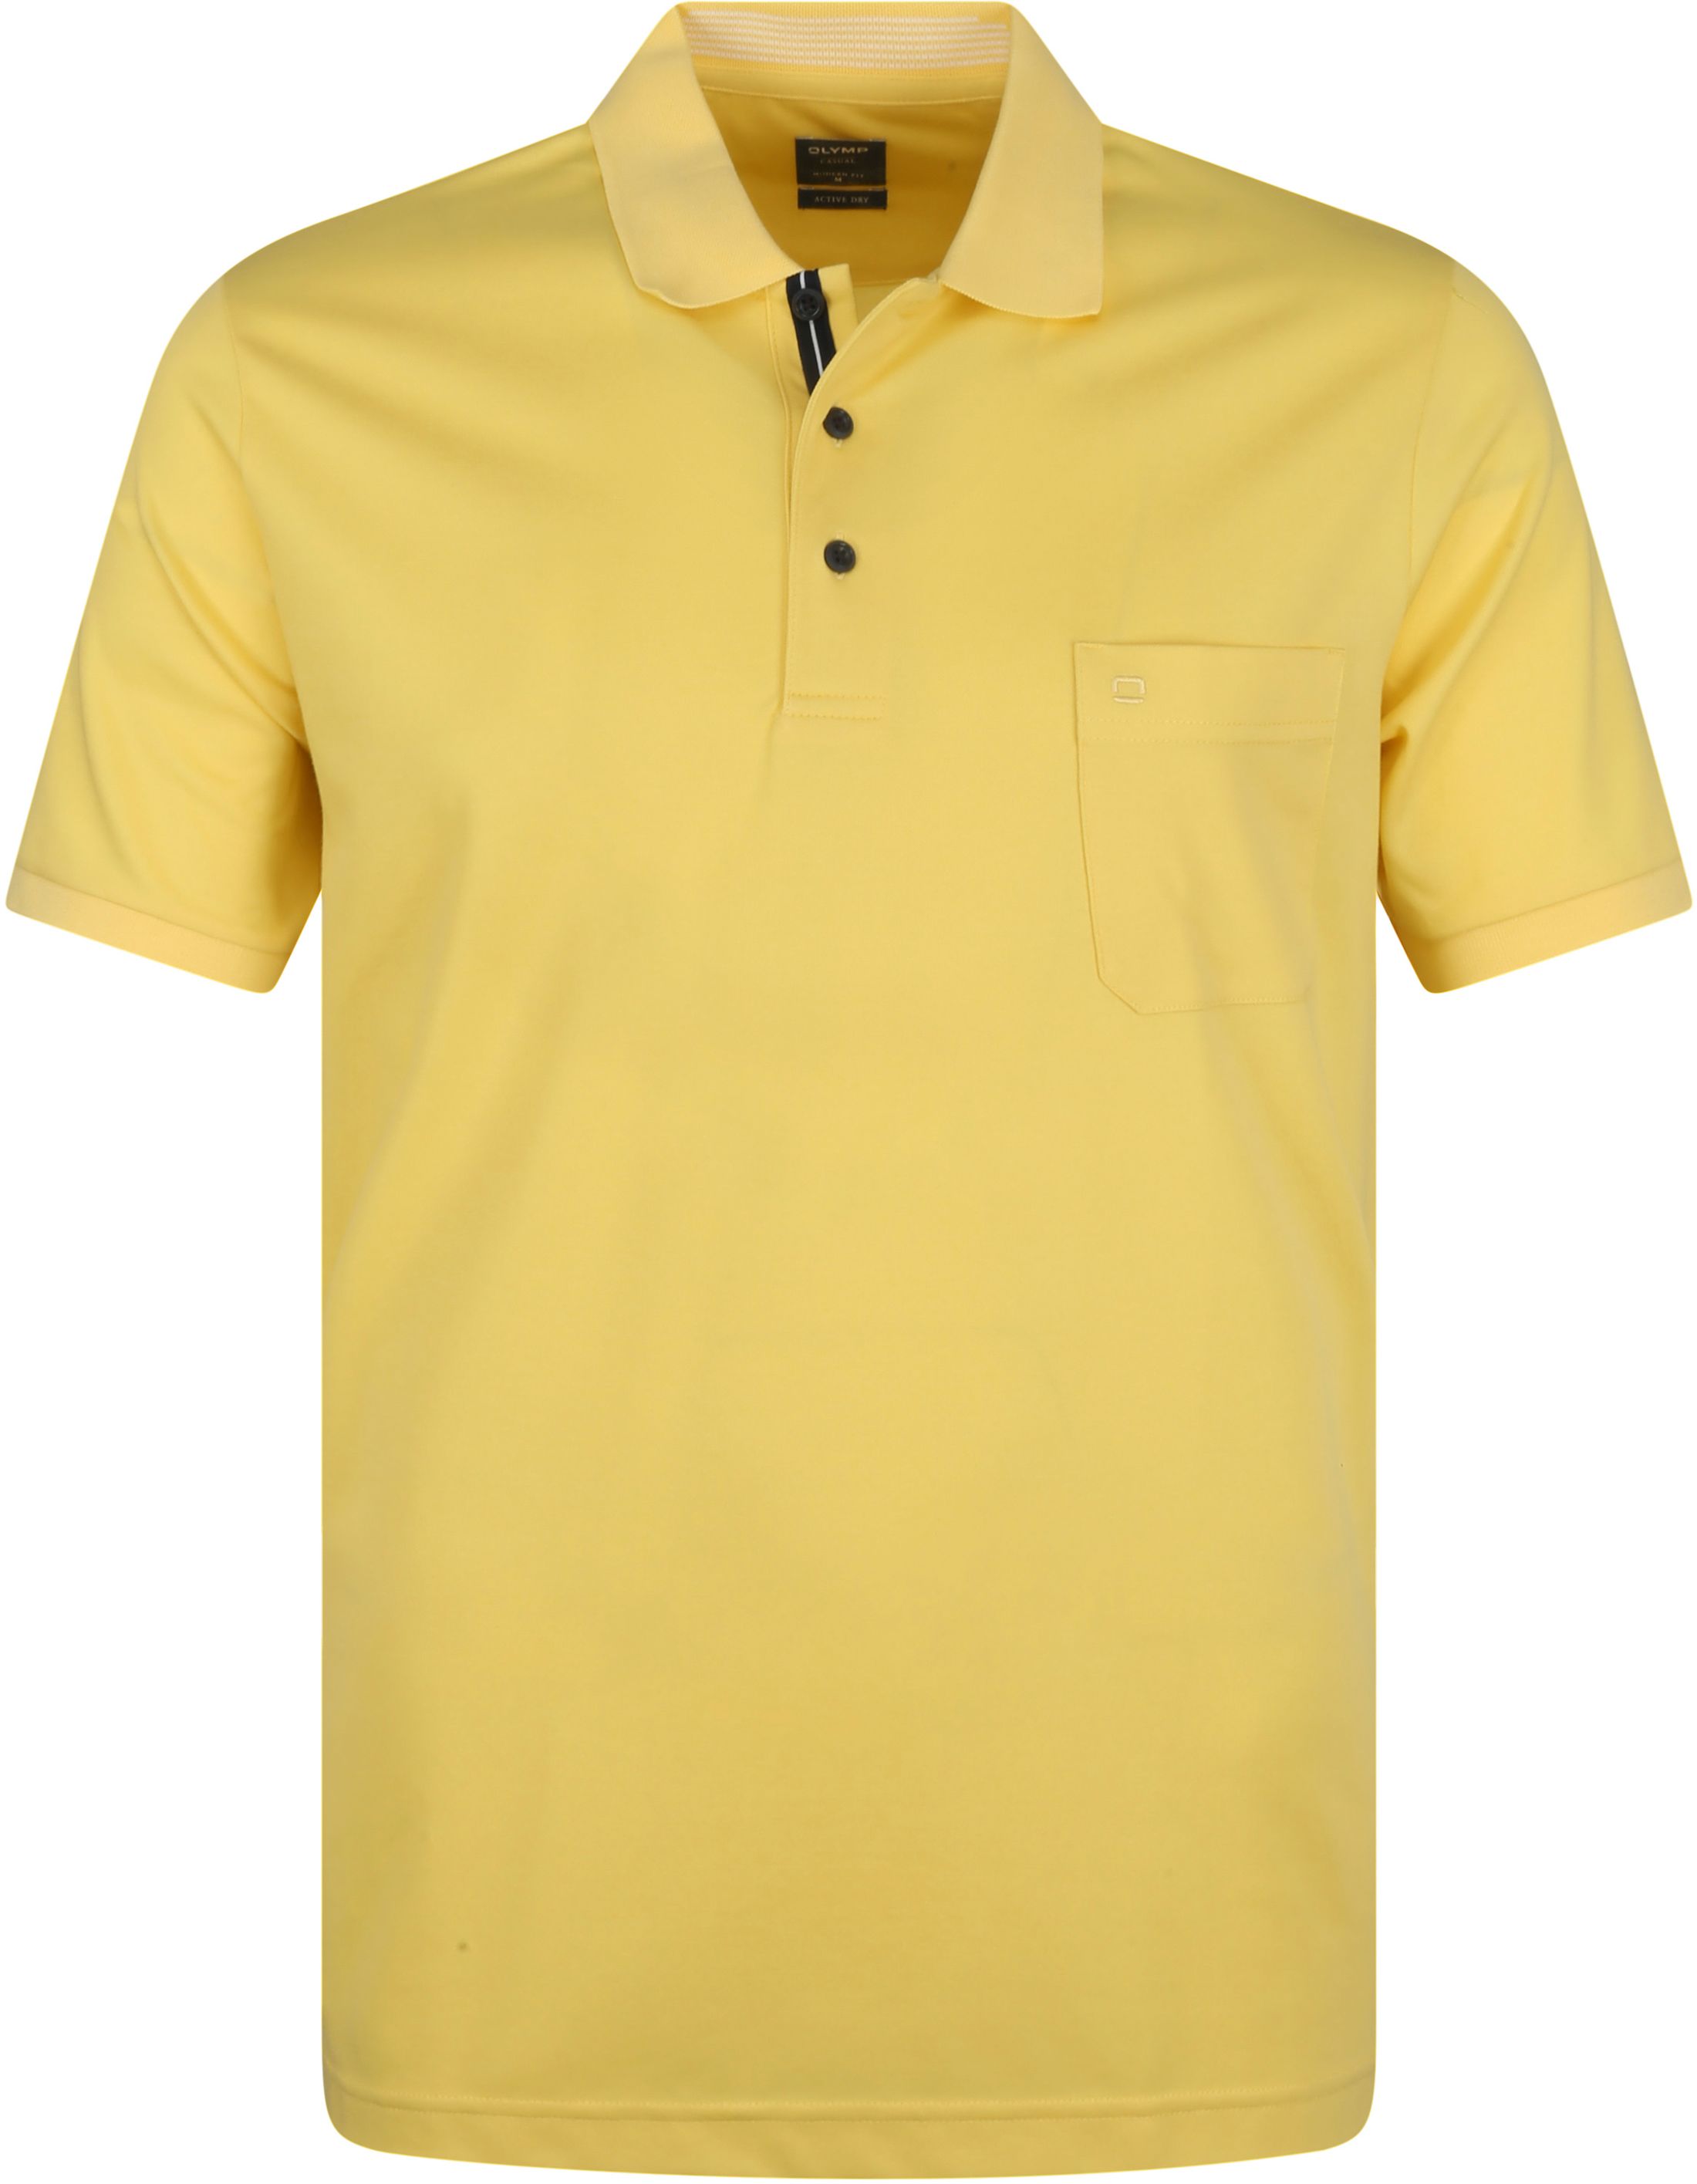 Olymp Polo Yellow size 3XL